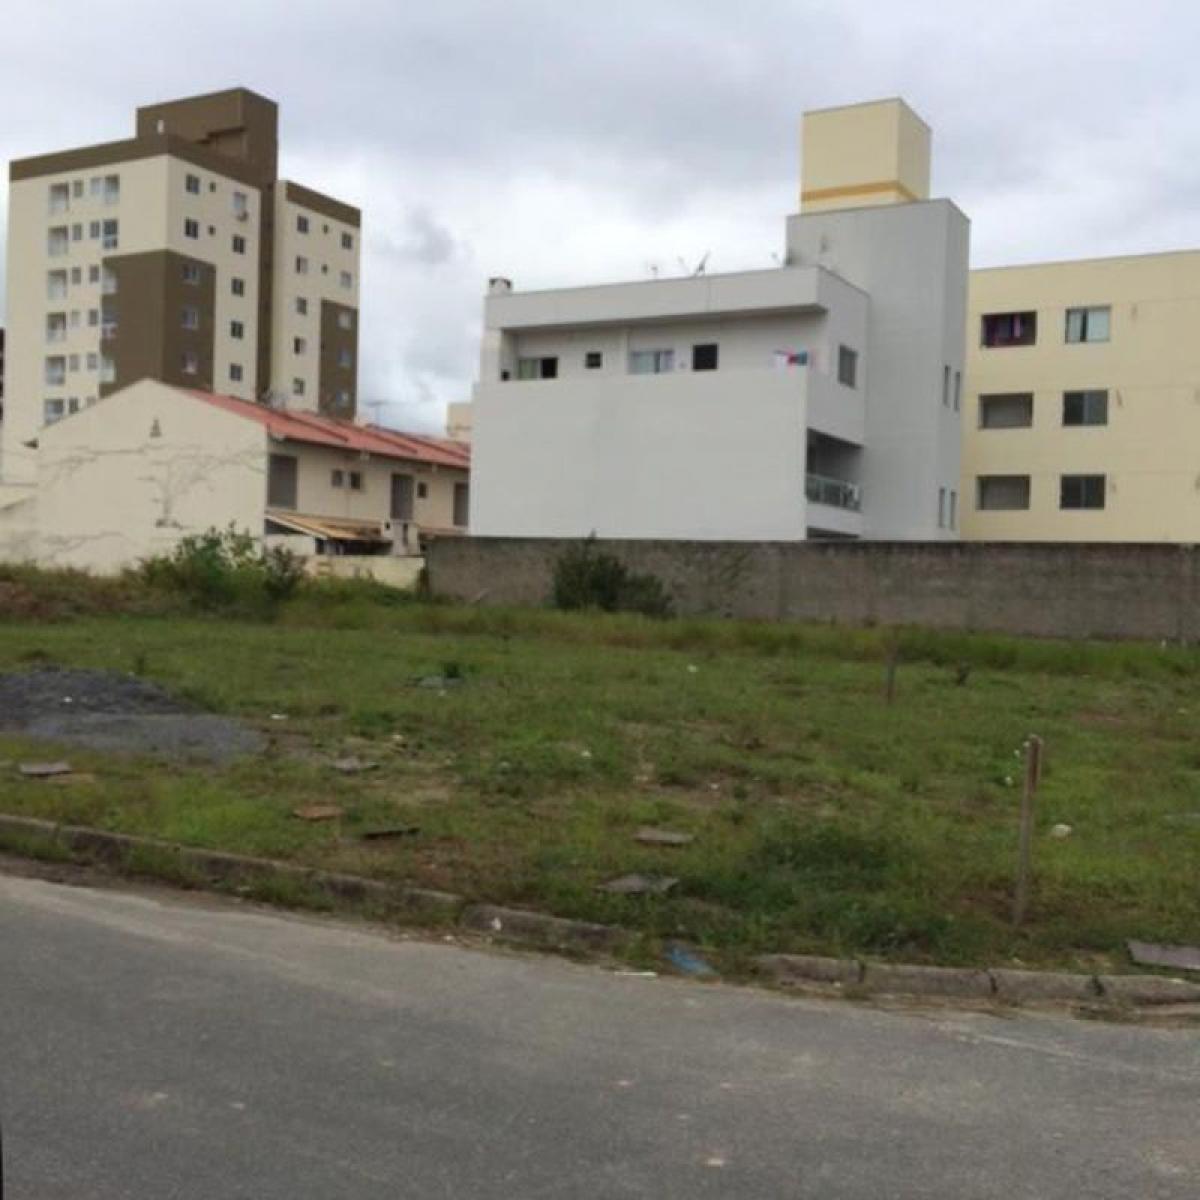 Picture of Residential Land For Sale in Camboriu, Santa Catarina, Brazil